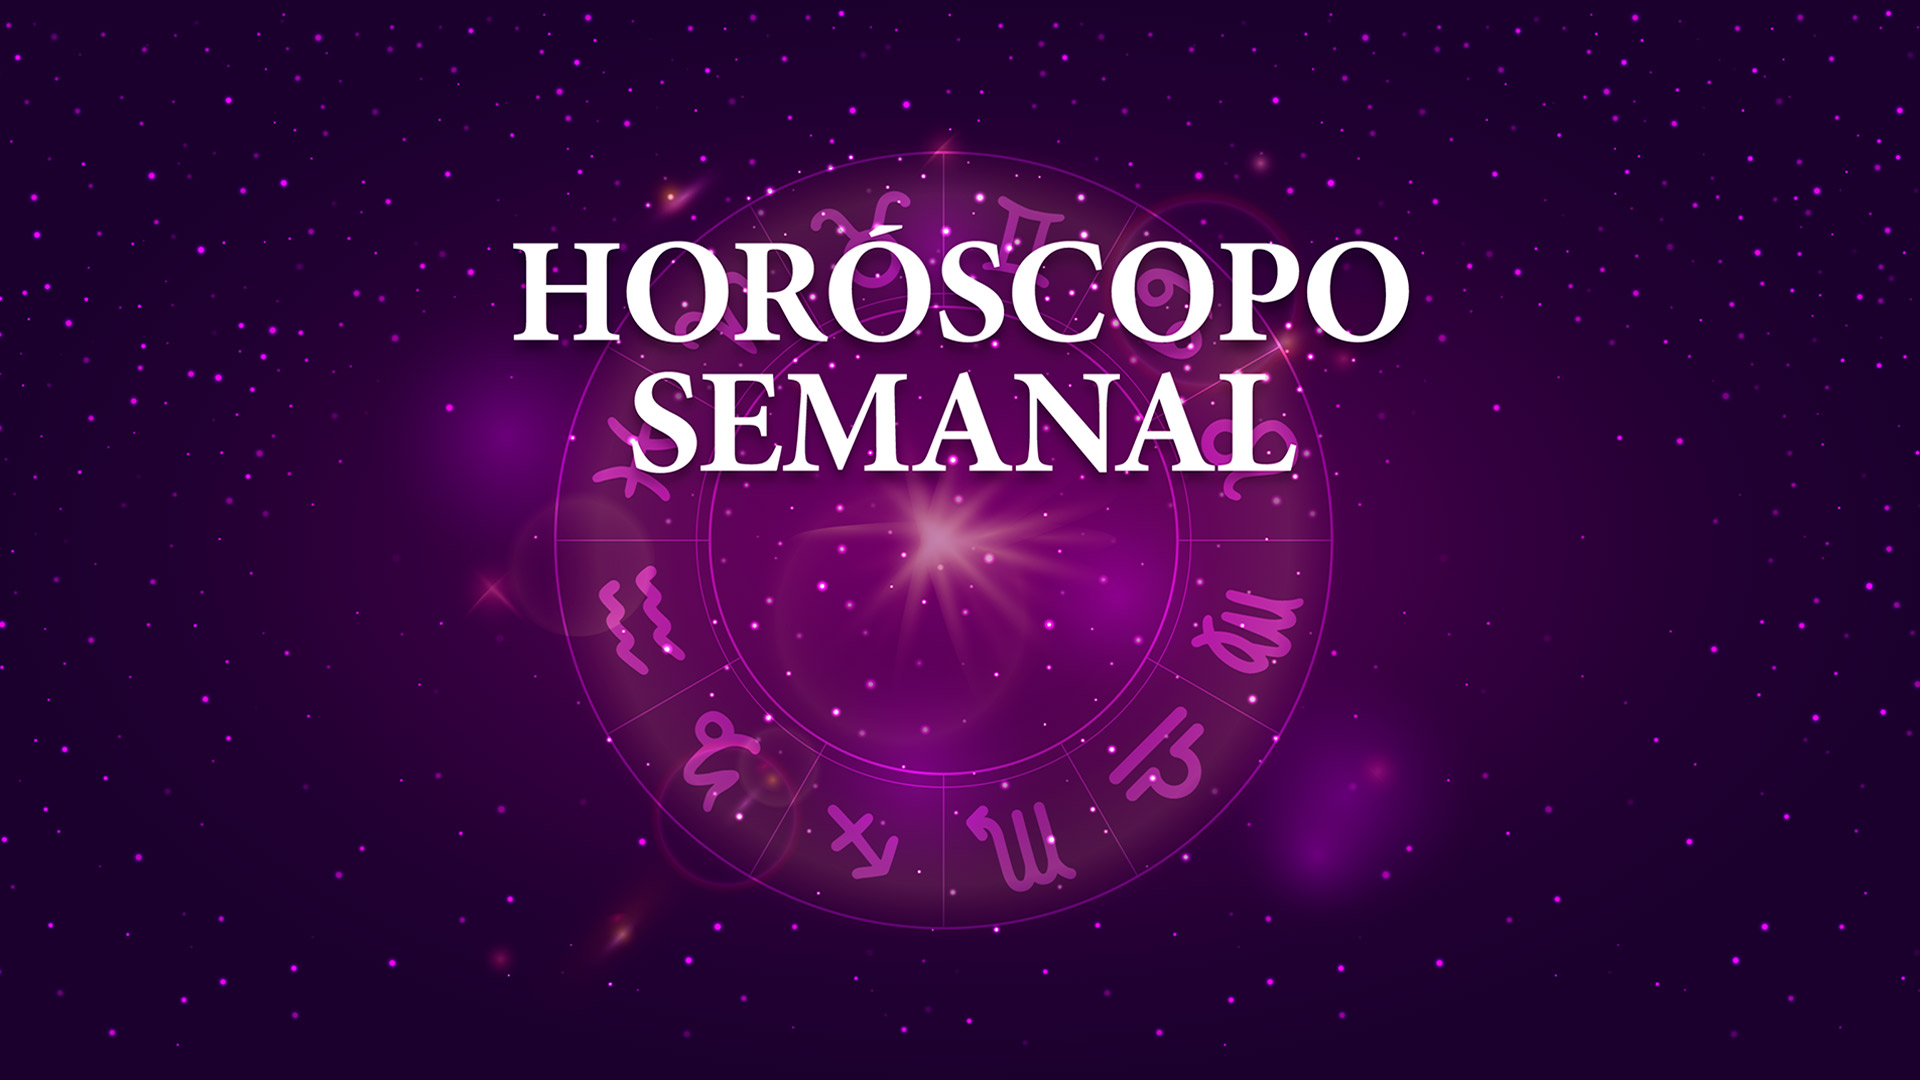 horoscopo-semanal-1920x1080